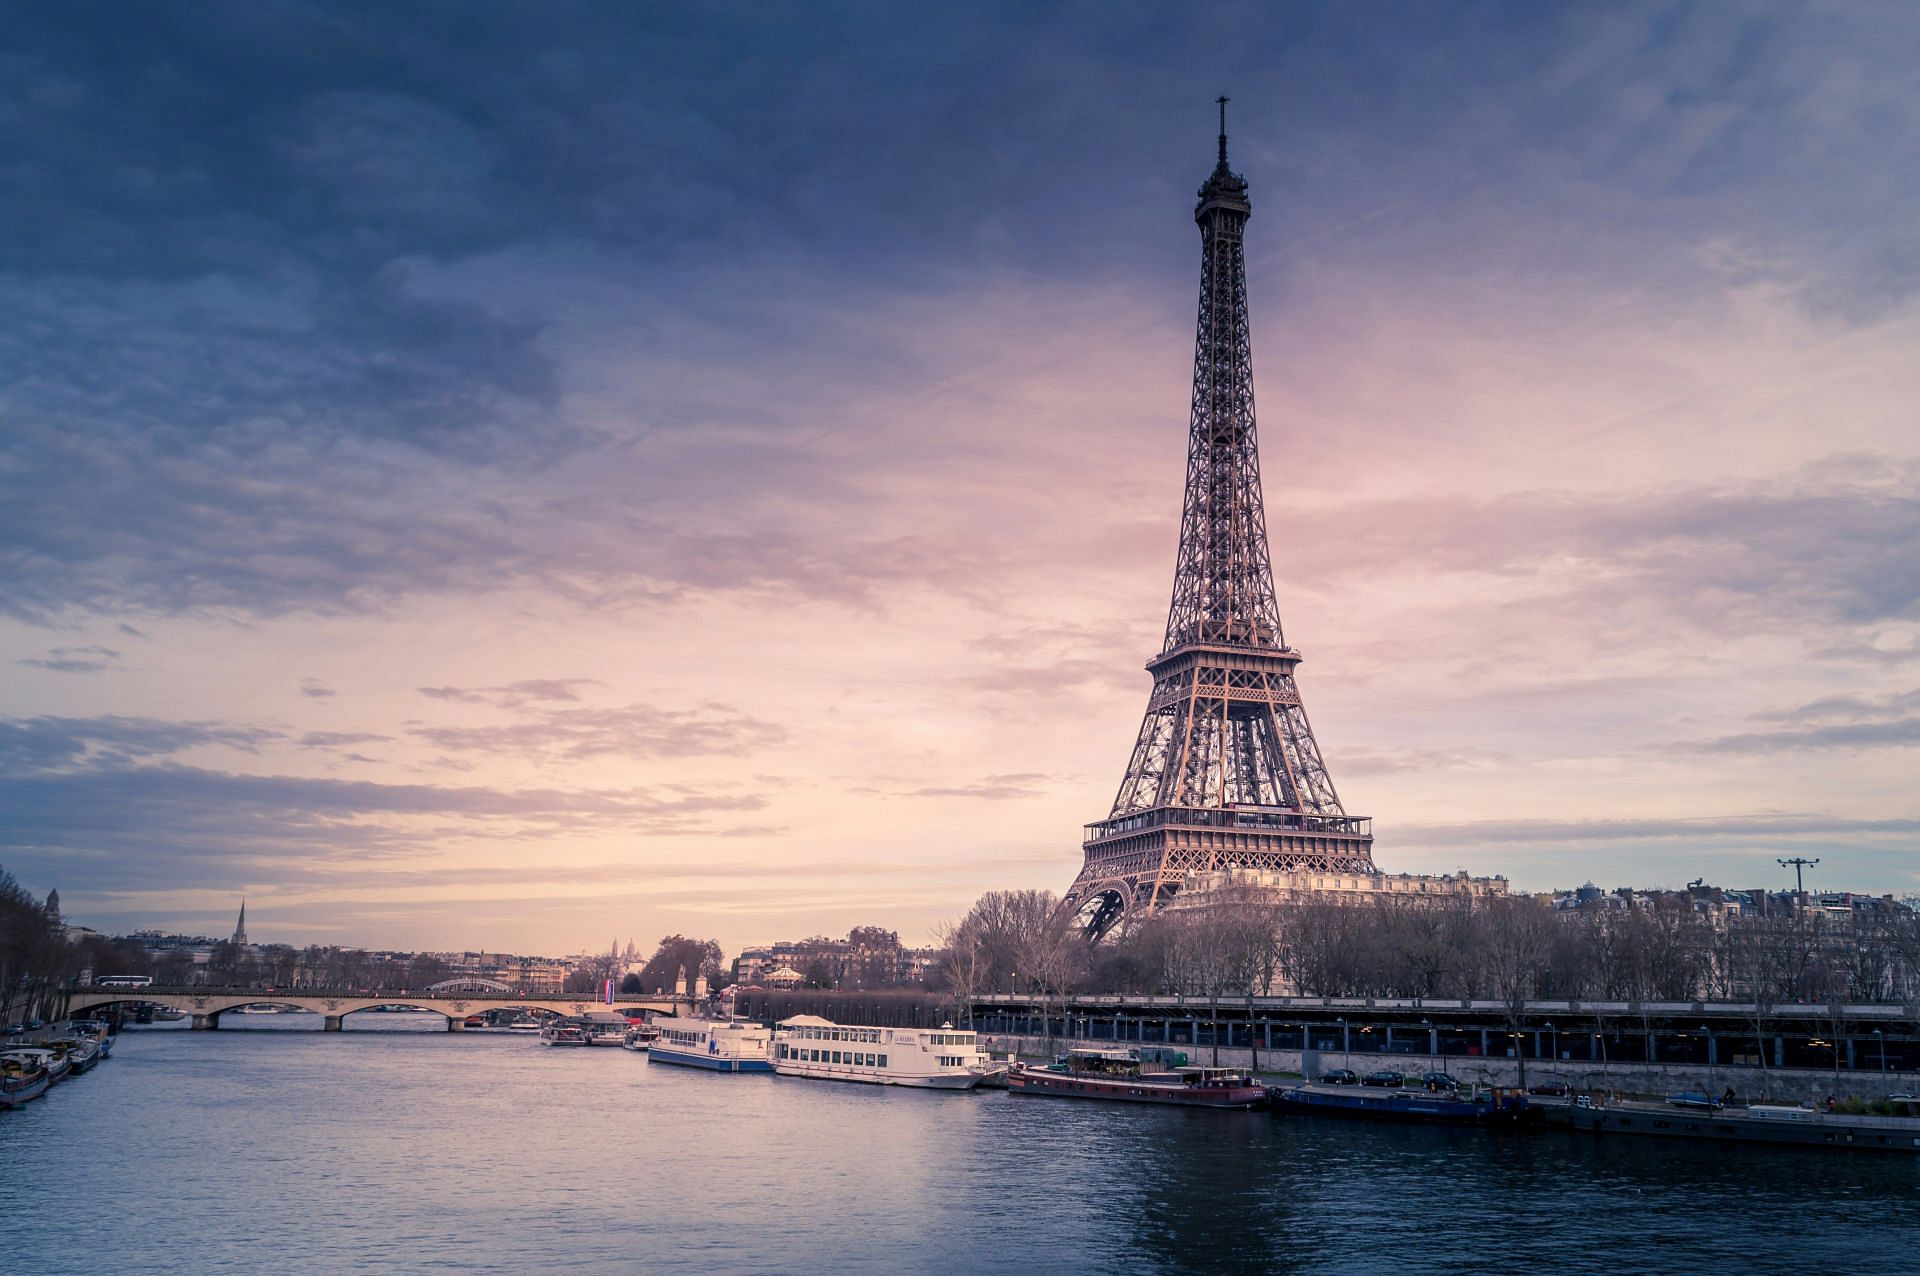 Did Eiffel Tower really caught fire? (Image via Unsplash)